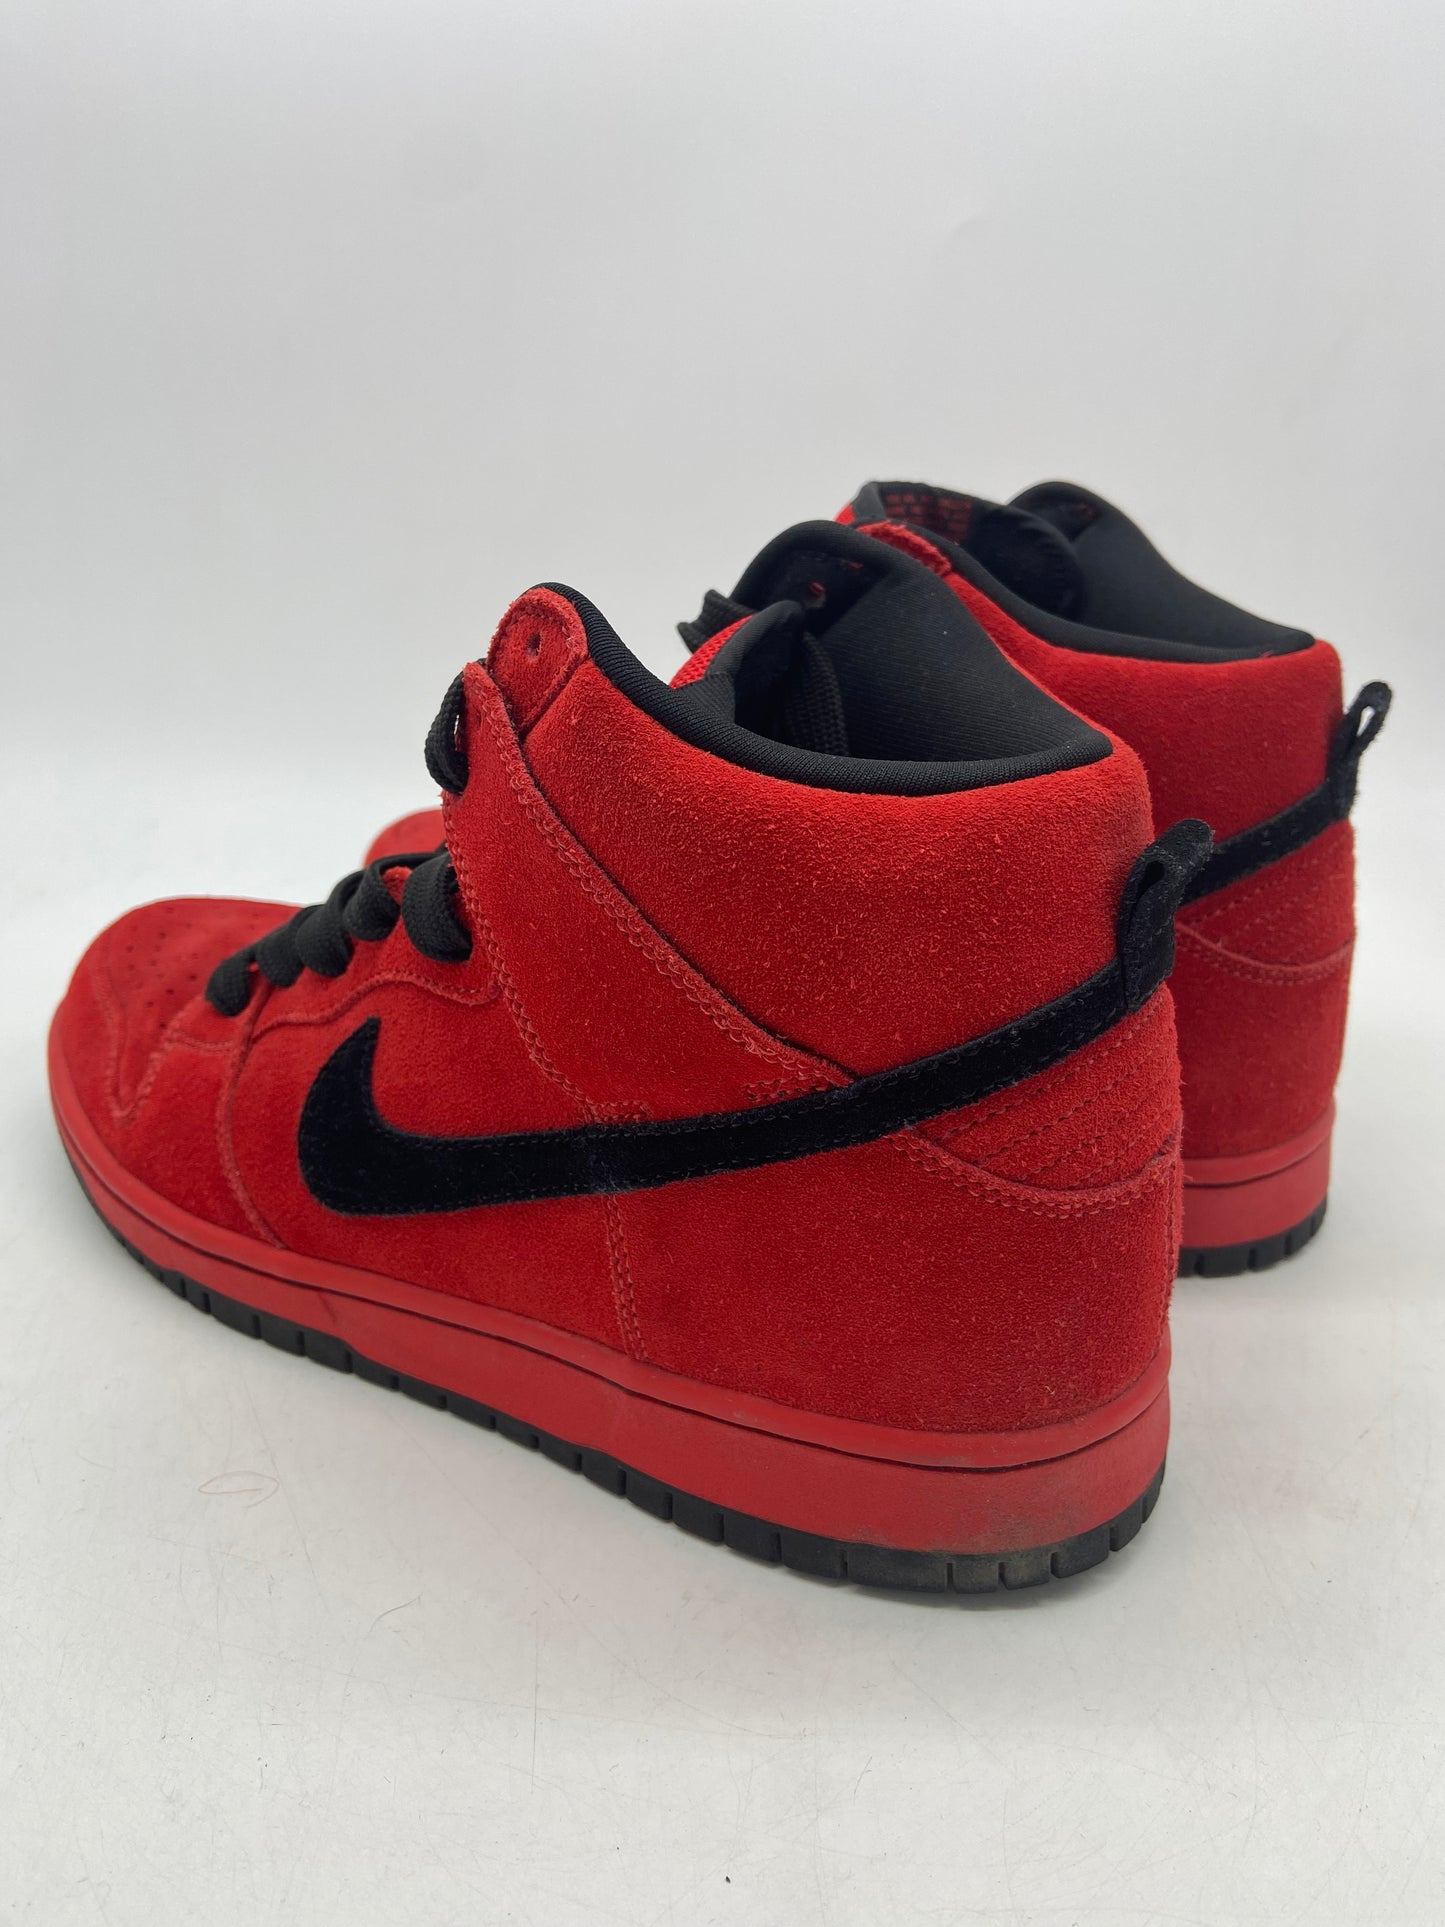 2011 Preowned Nike SB Dunk High Red Devil Sz 9M/10.5W (305050-600)